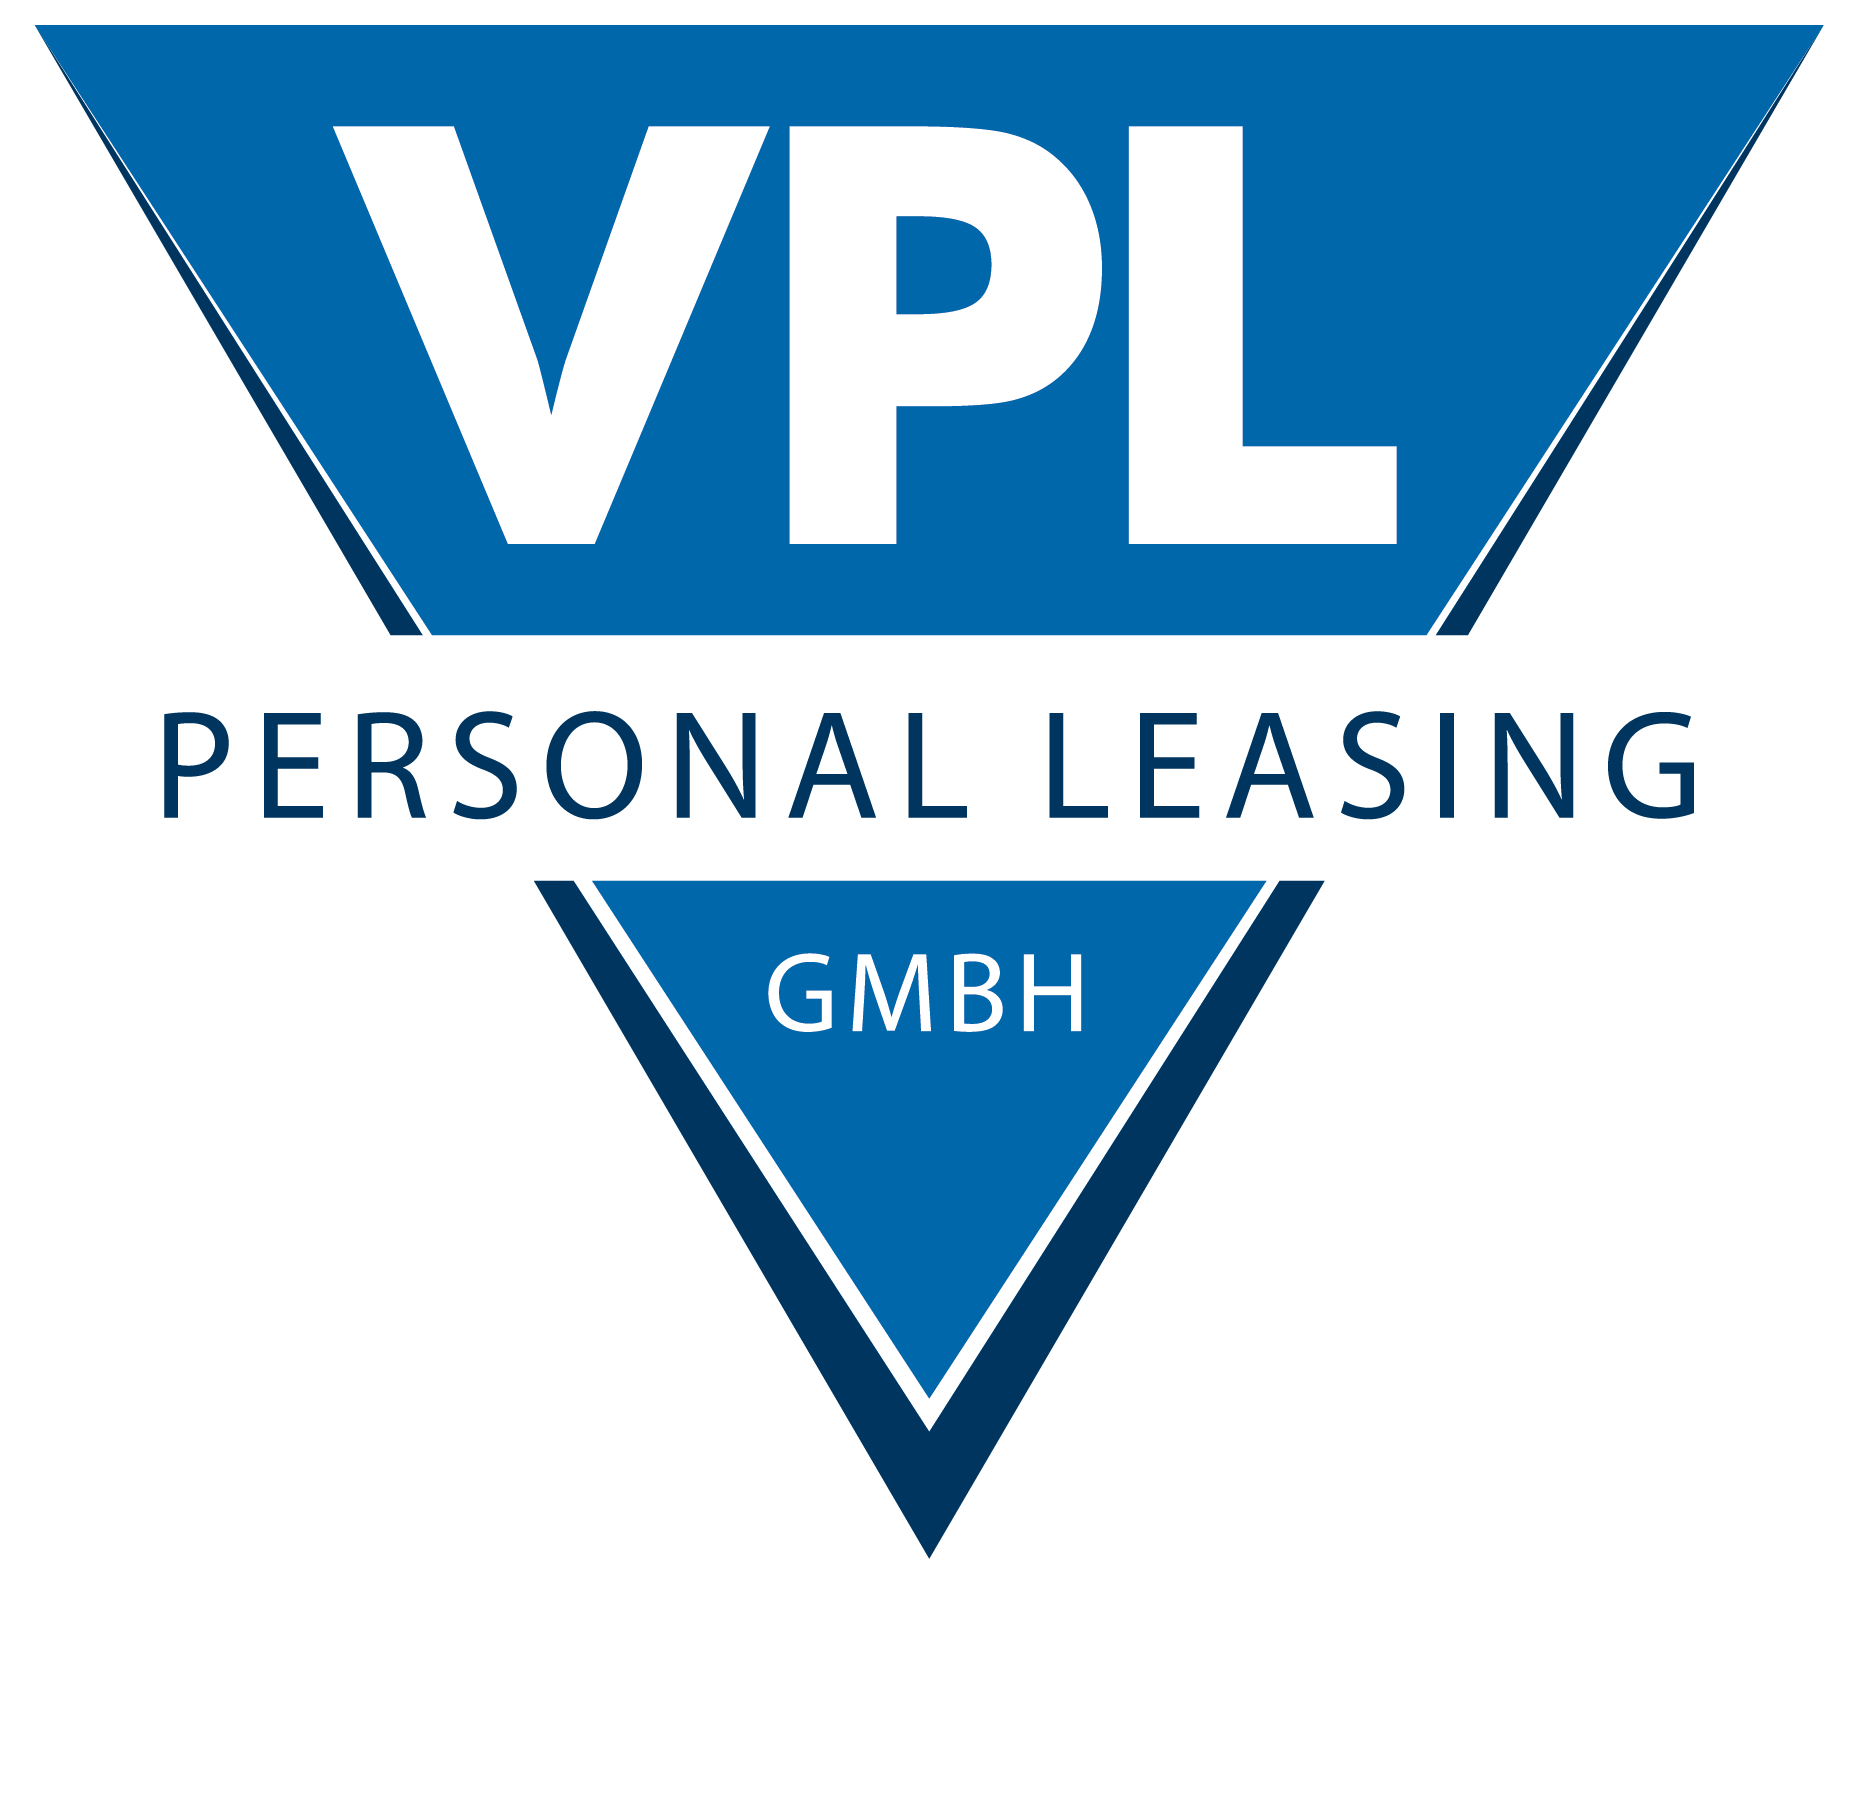 VPL Personal Leasing GmbH